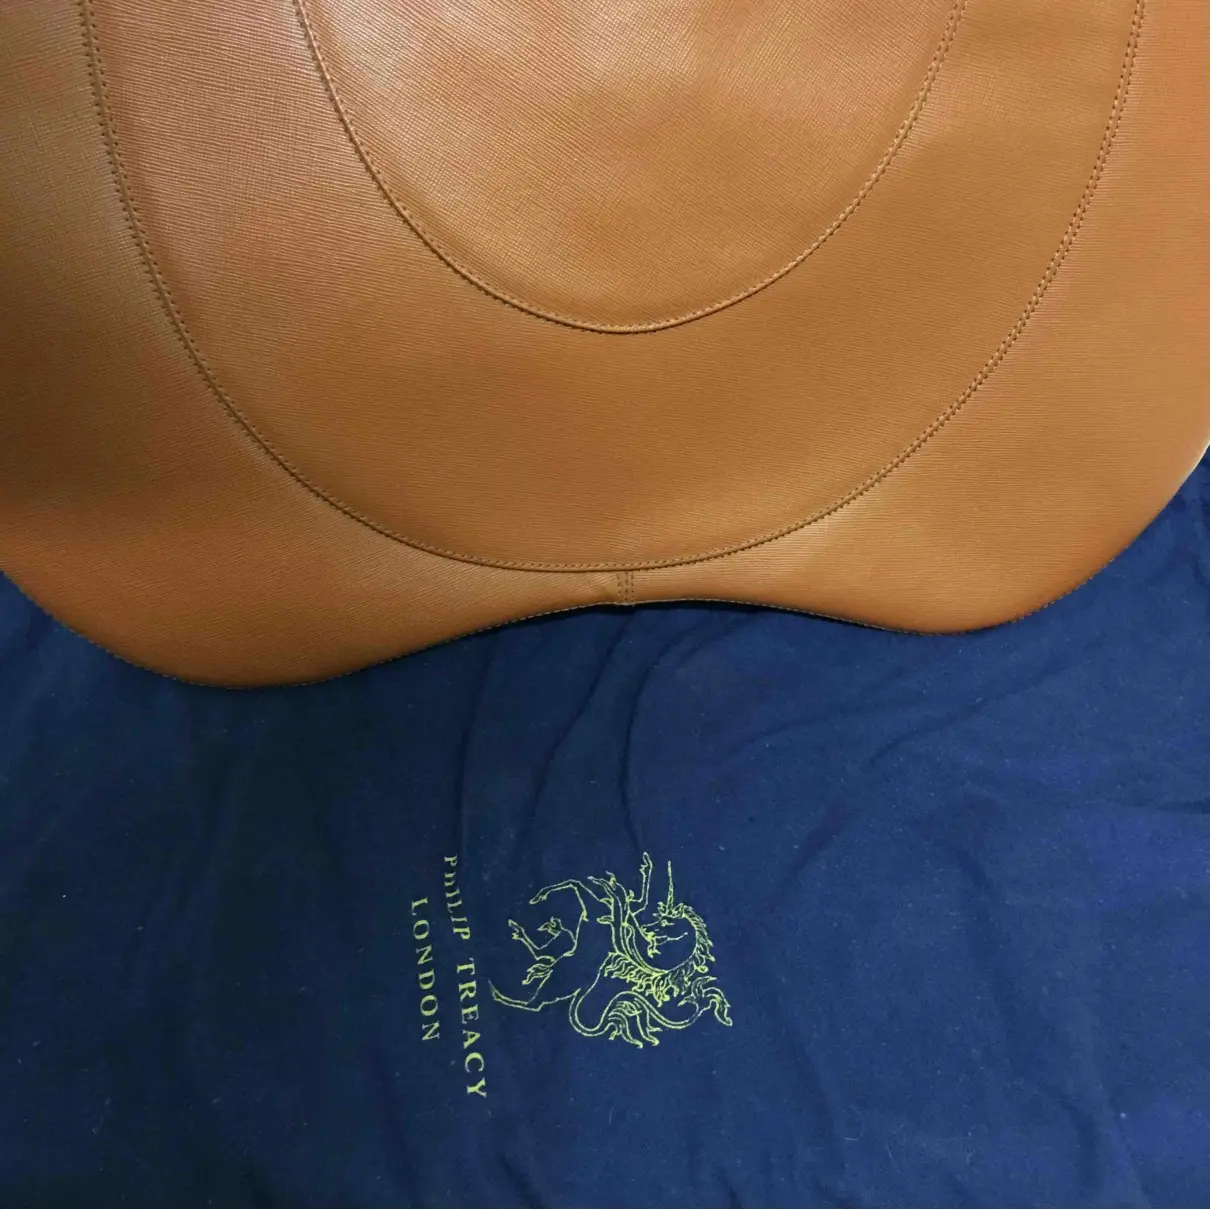 Philip Treacy Leather handbag for sale